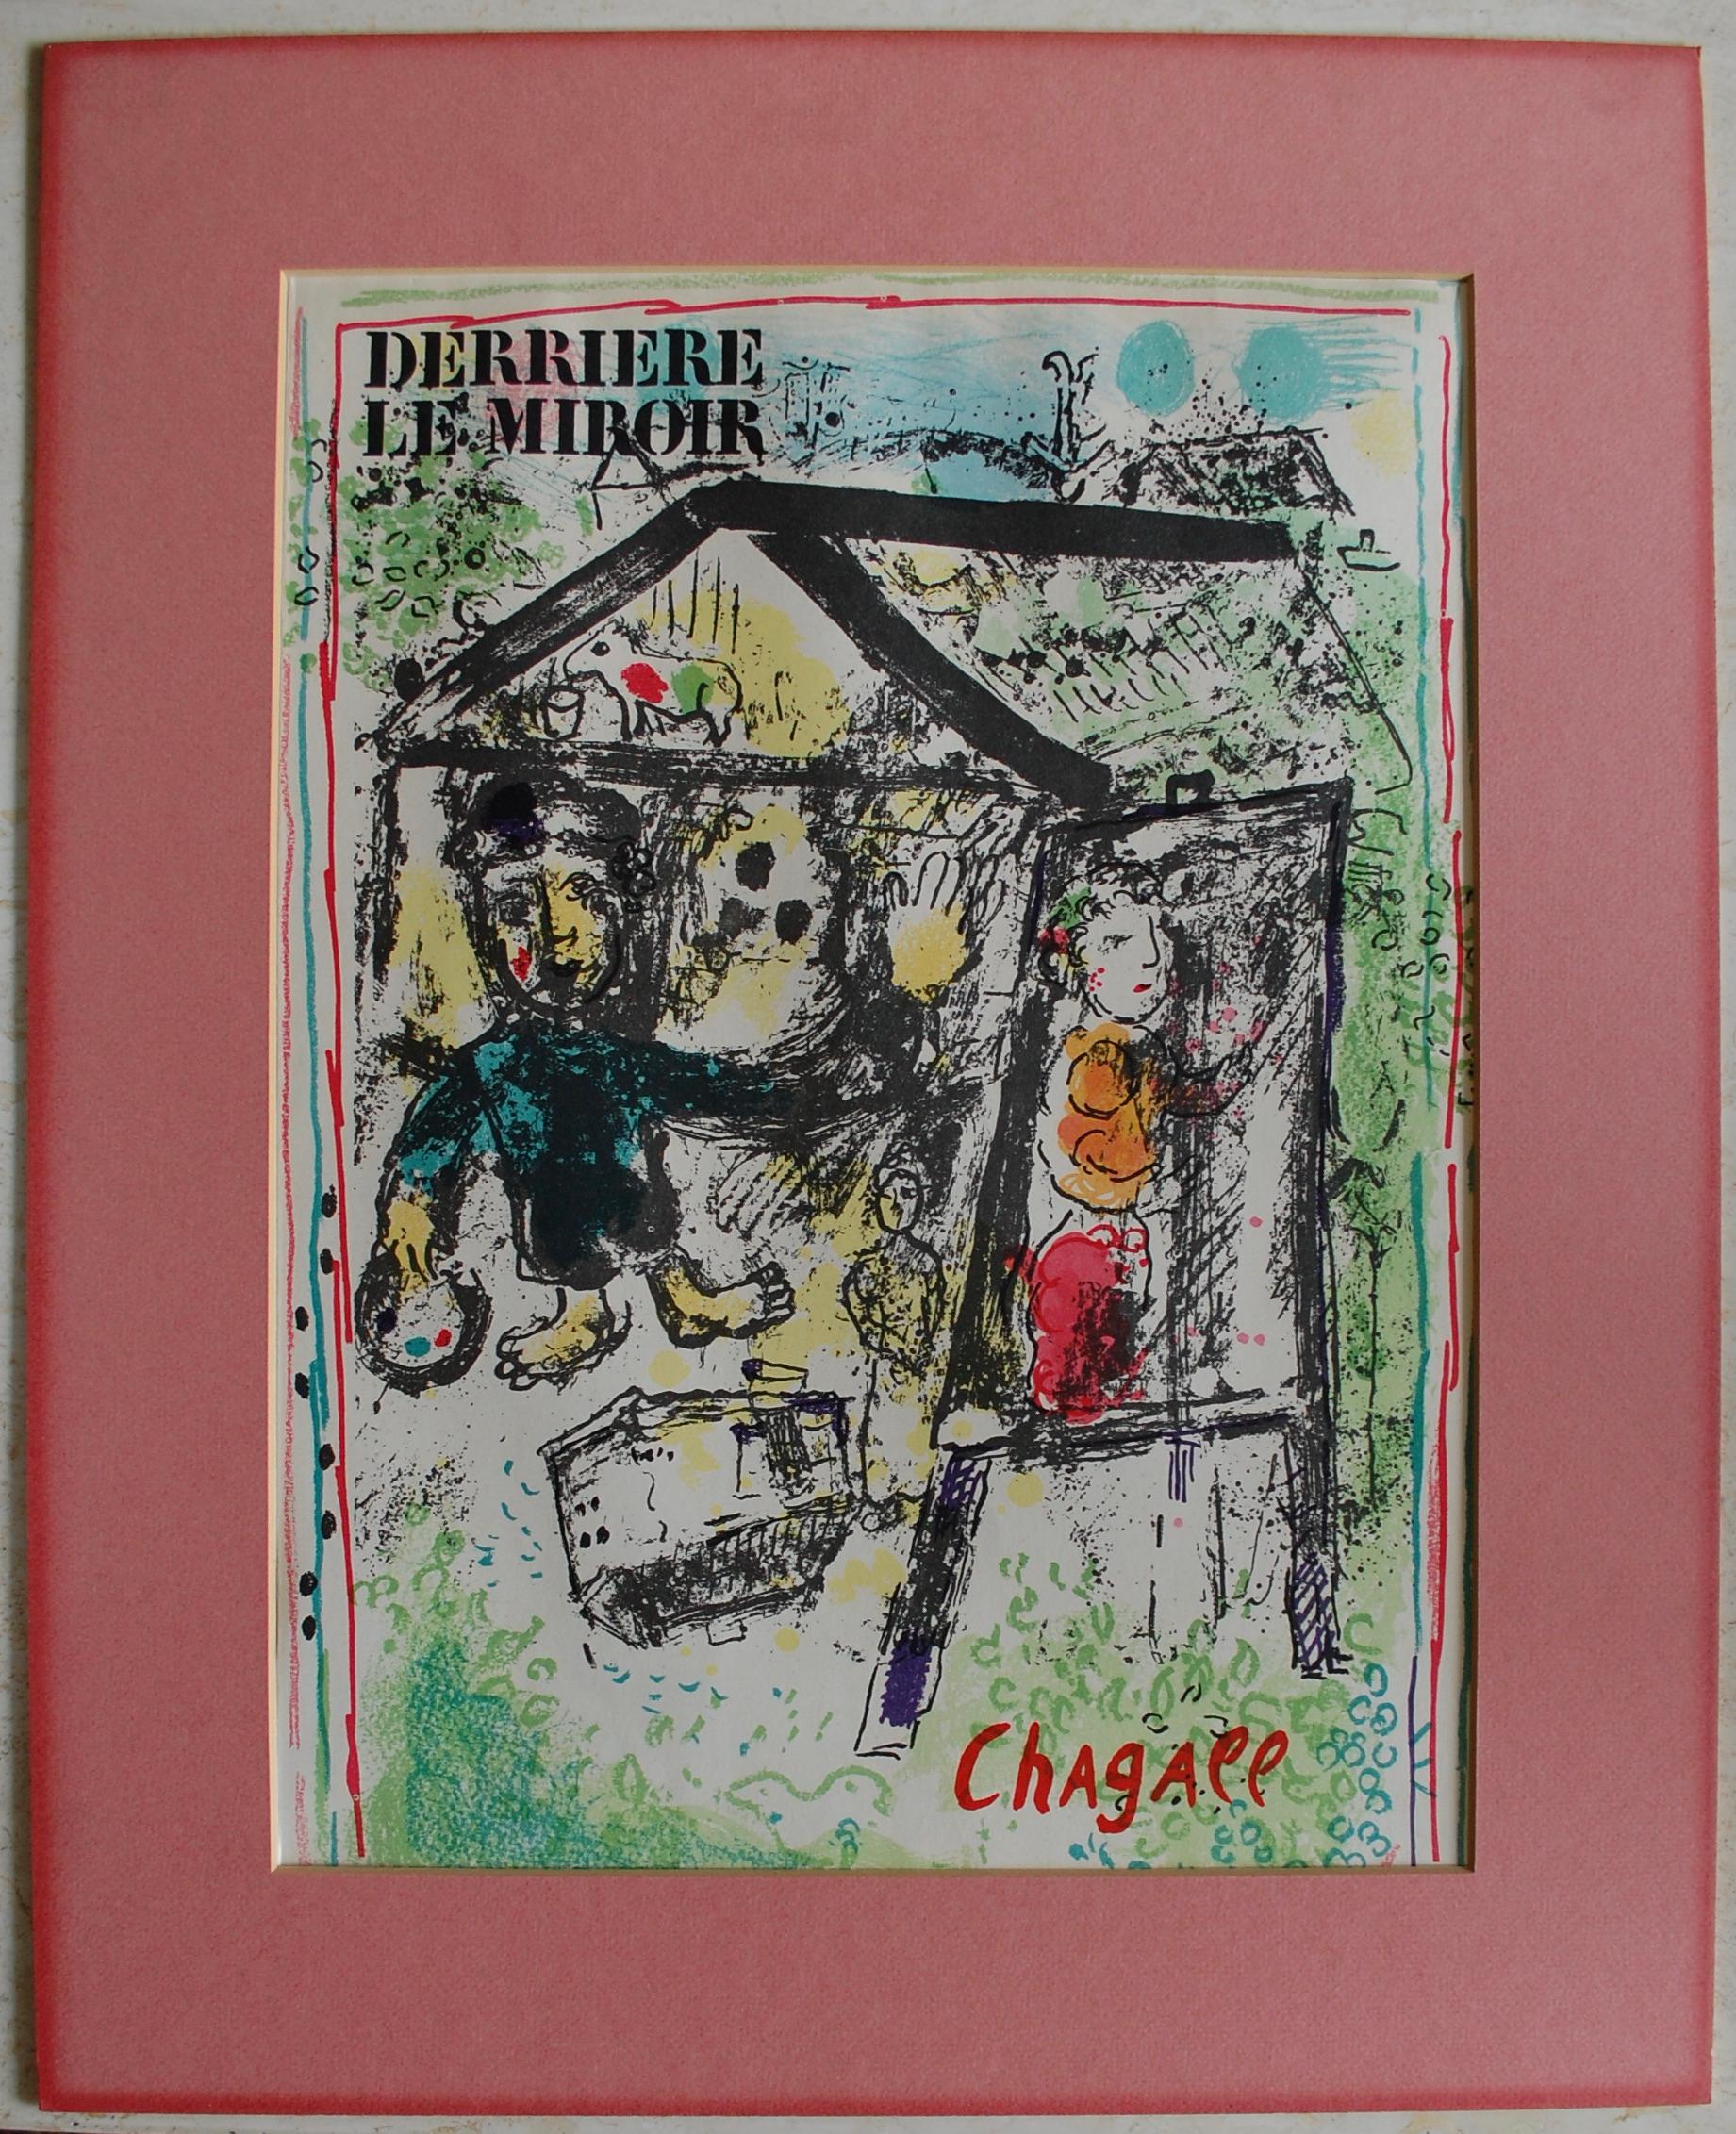 Marc Chagall Lithograph-Le Peintre Derrier le Miroir  - Print by (after) Marc Chagall